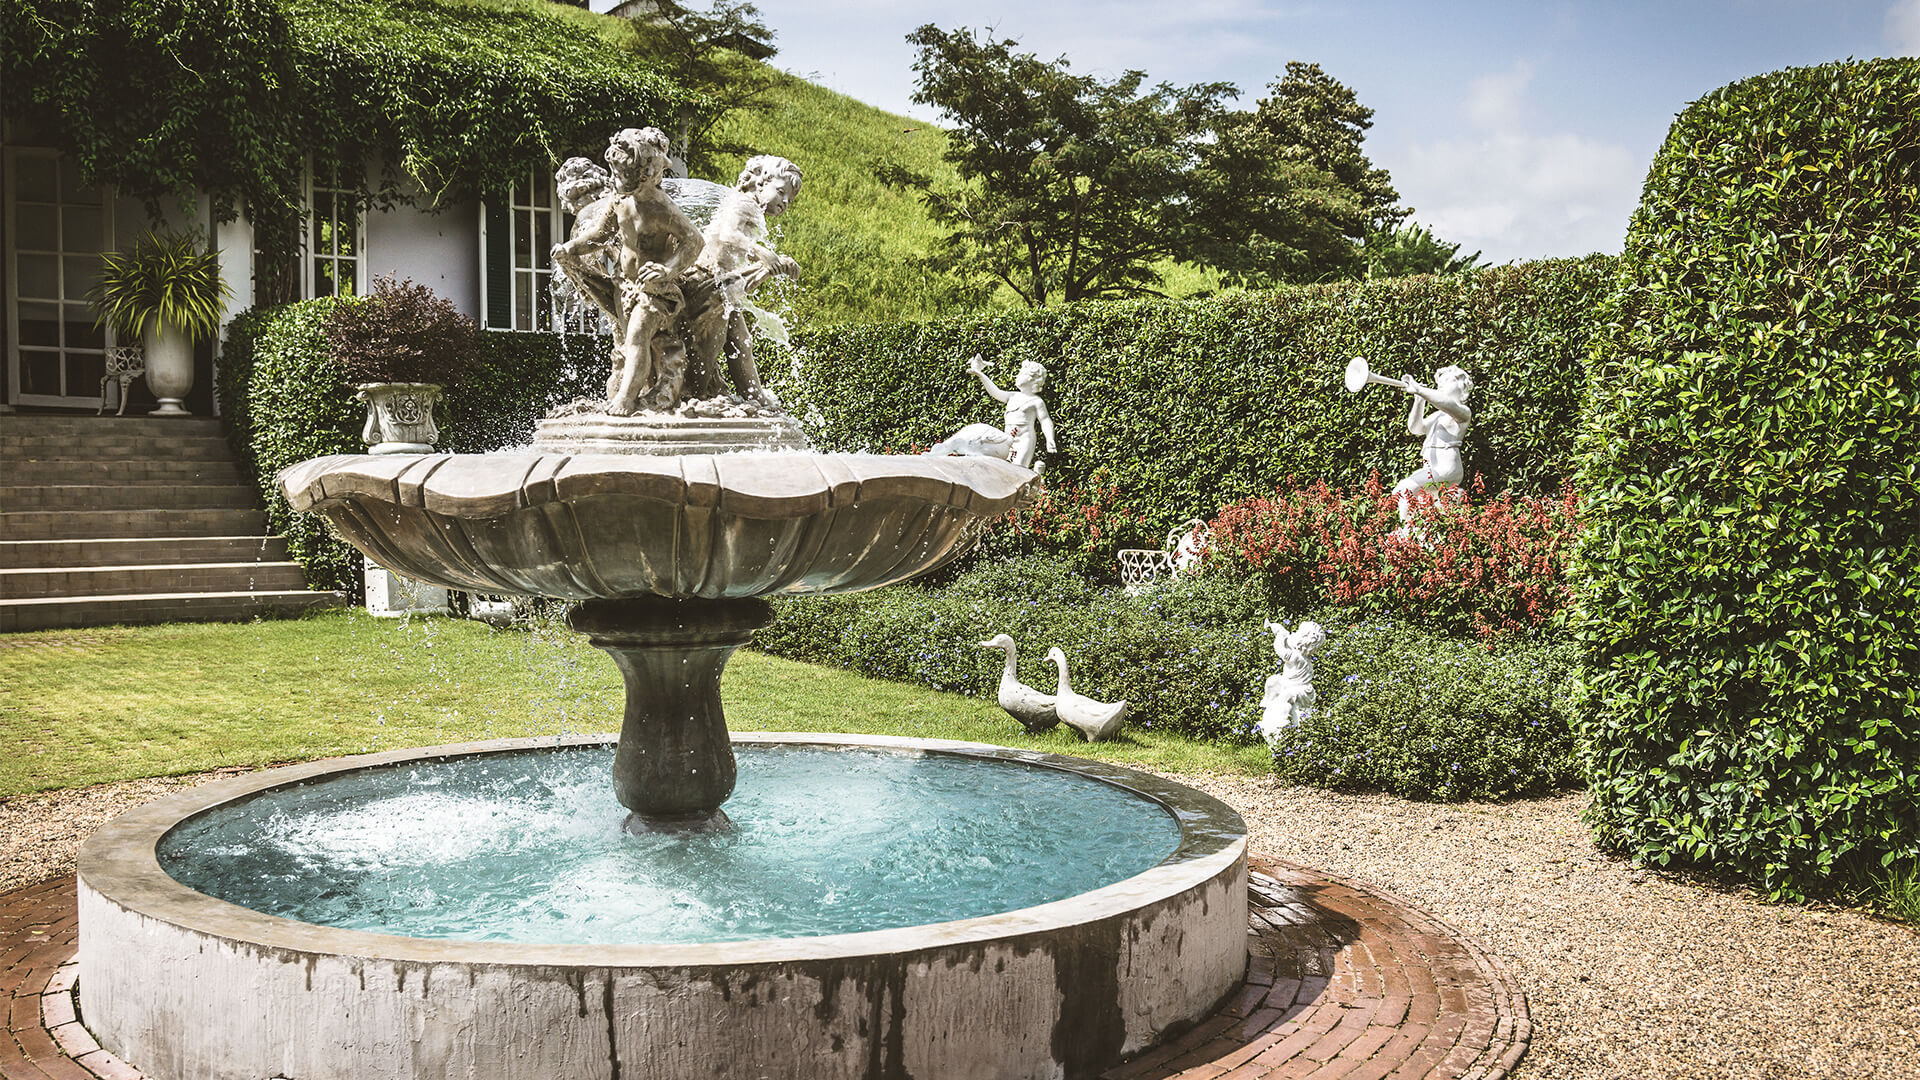 Traditional water fountain in an English garden